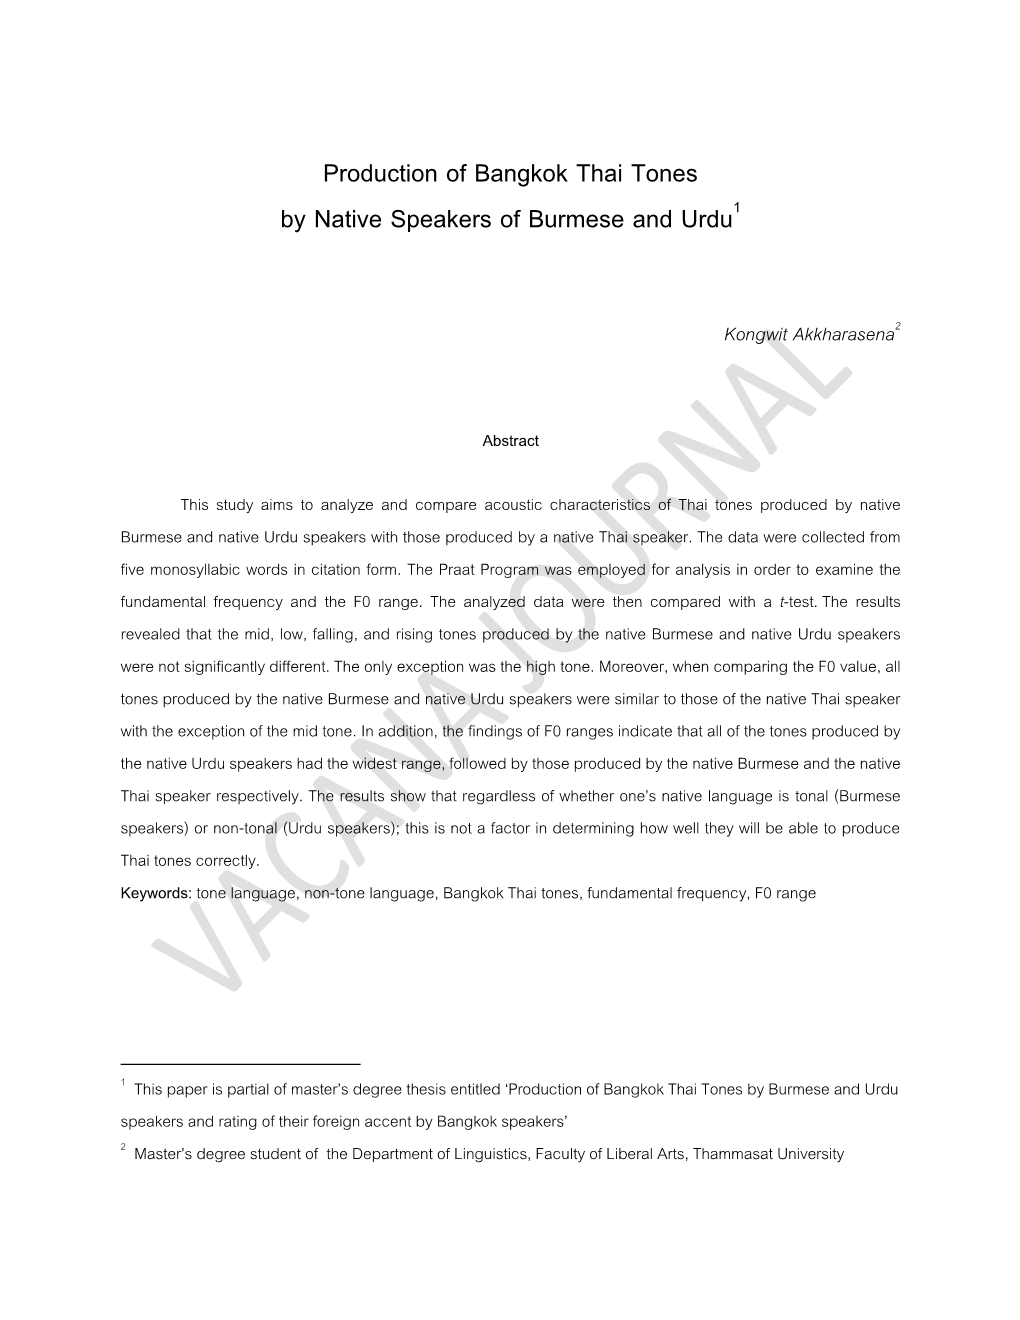 Production of Bangkok Thai Tones by Native Speakers of Burmese and Urdu1